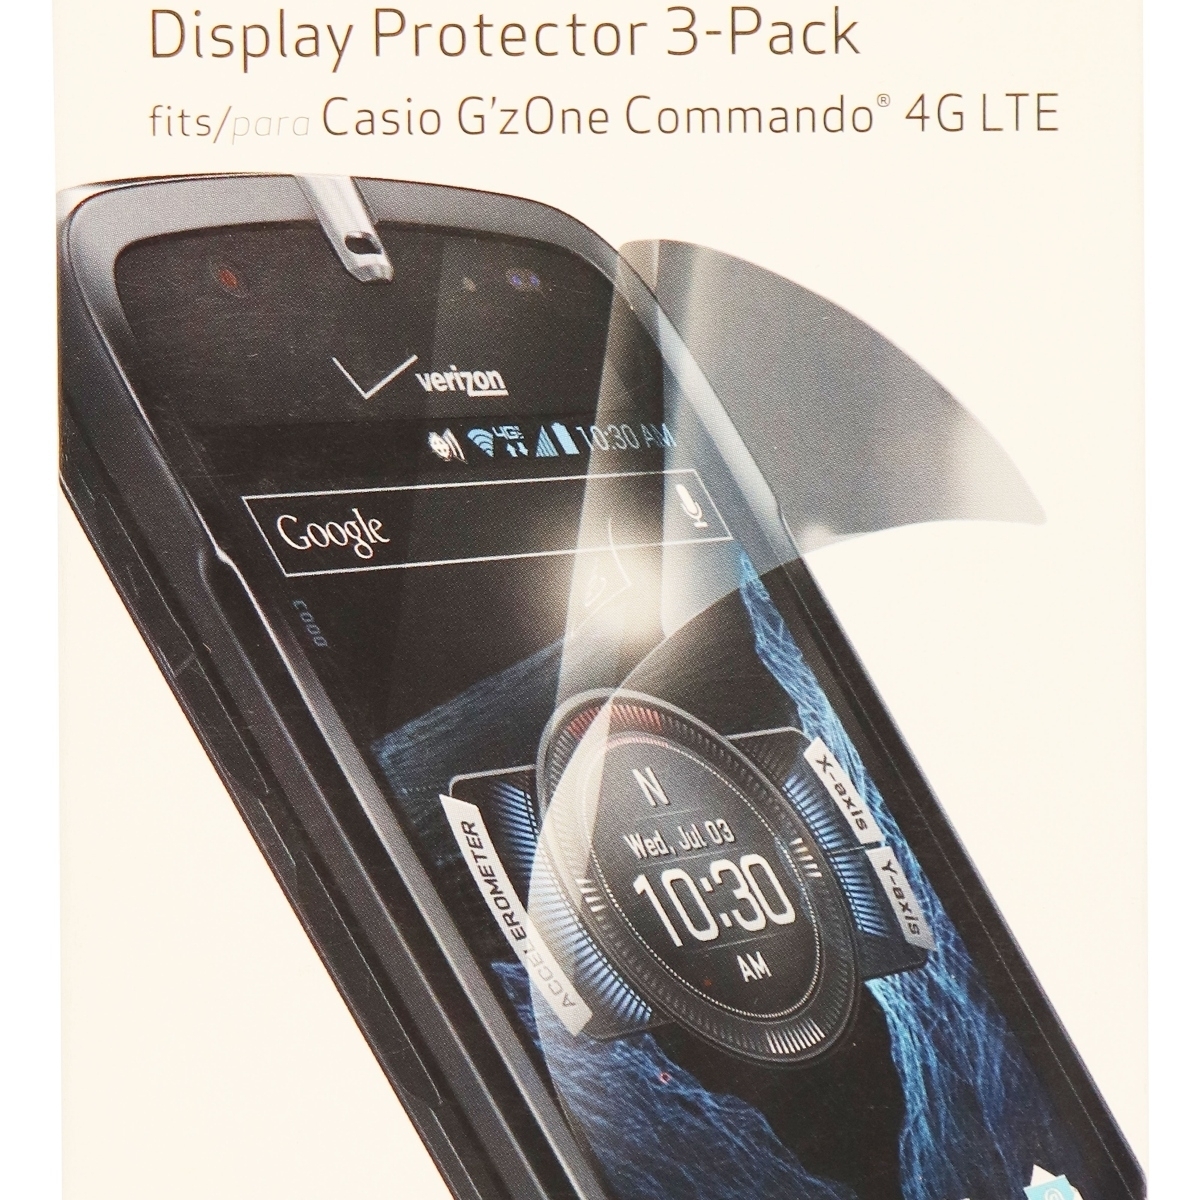 Verizon Wireless Display Protectors For Casio GzOne Commando 4G LTE (3 Pack)